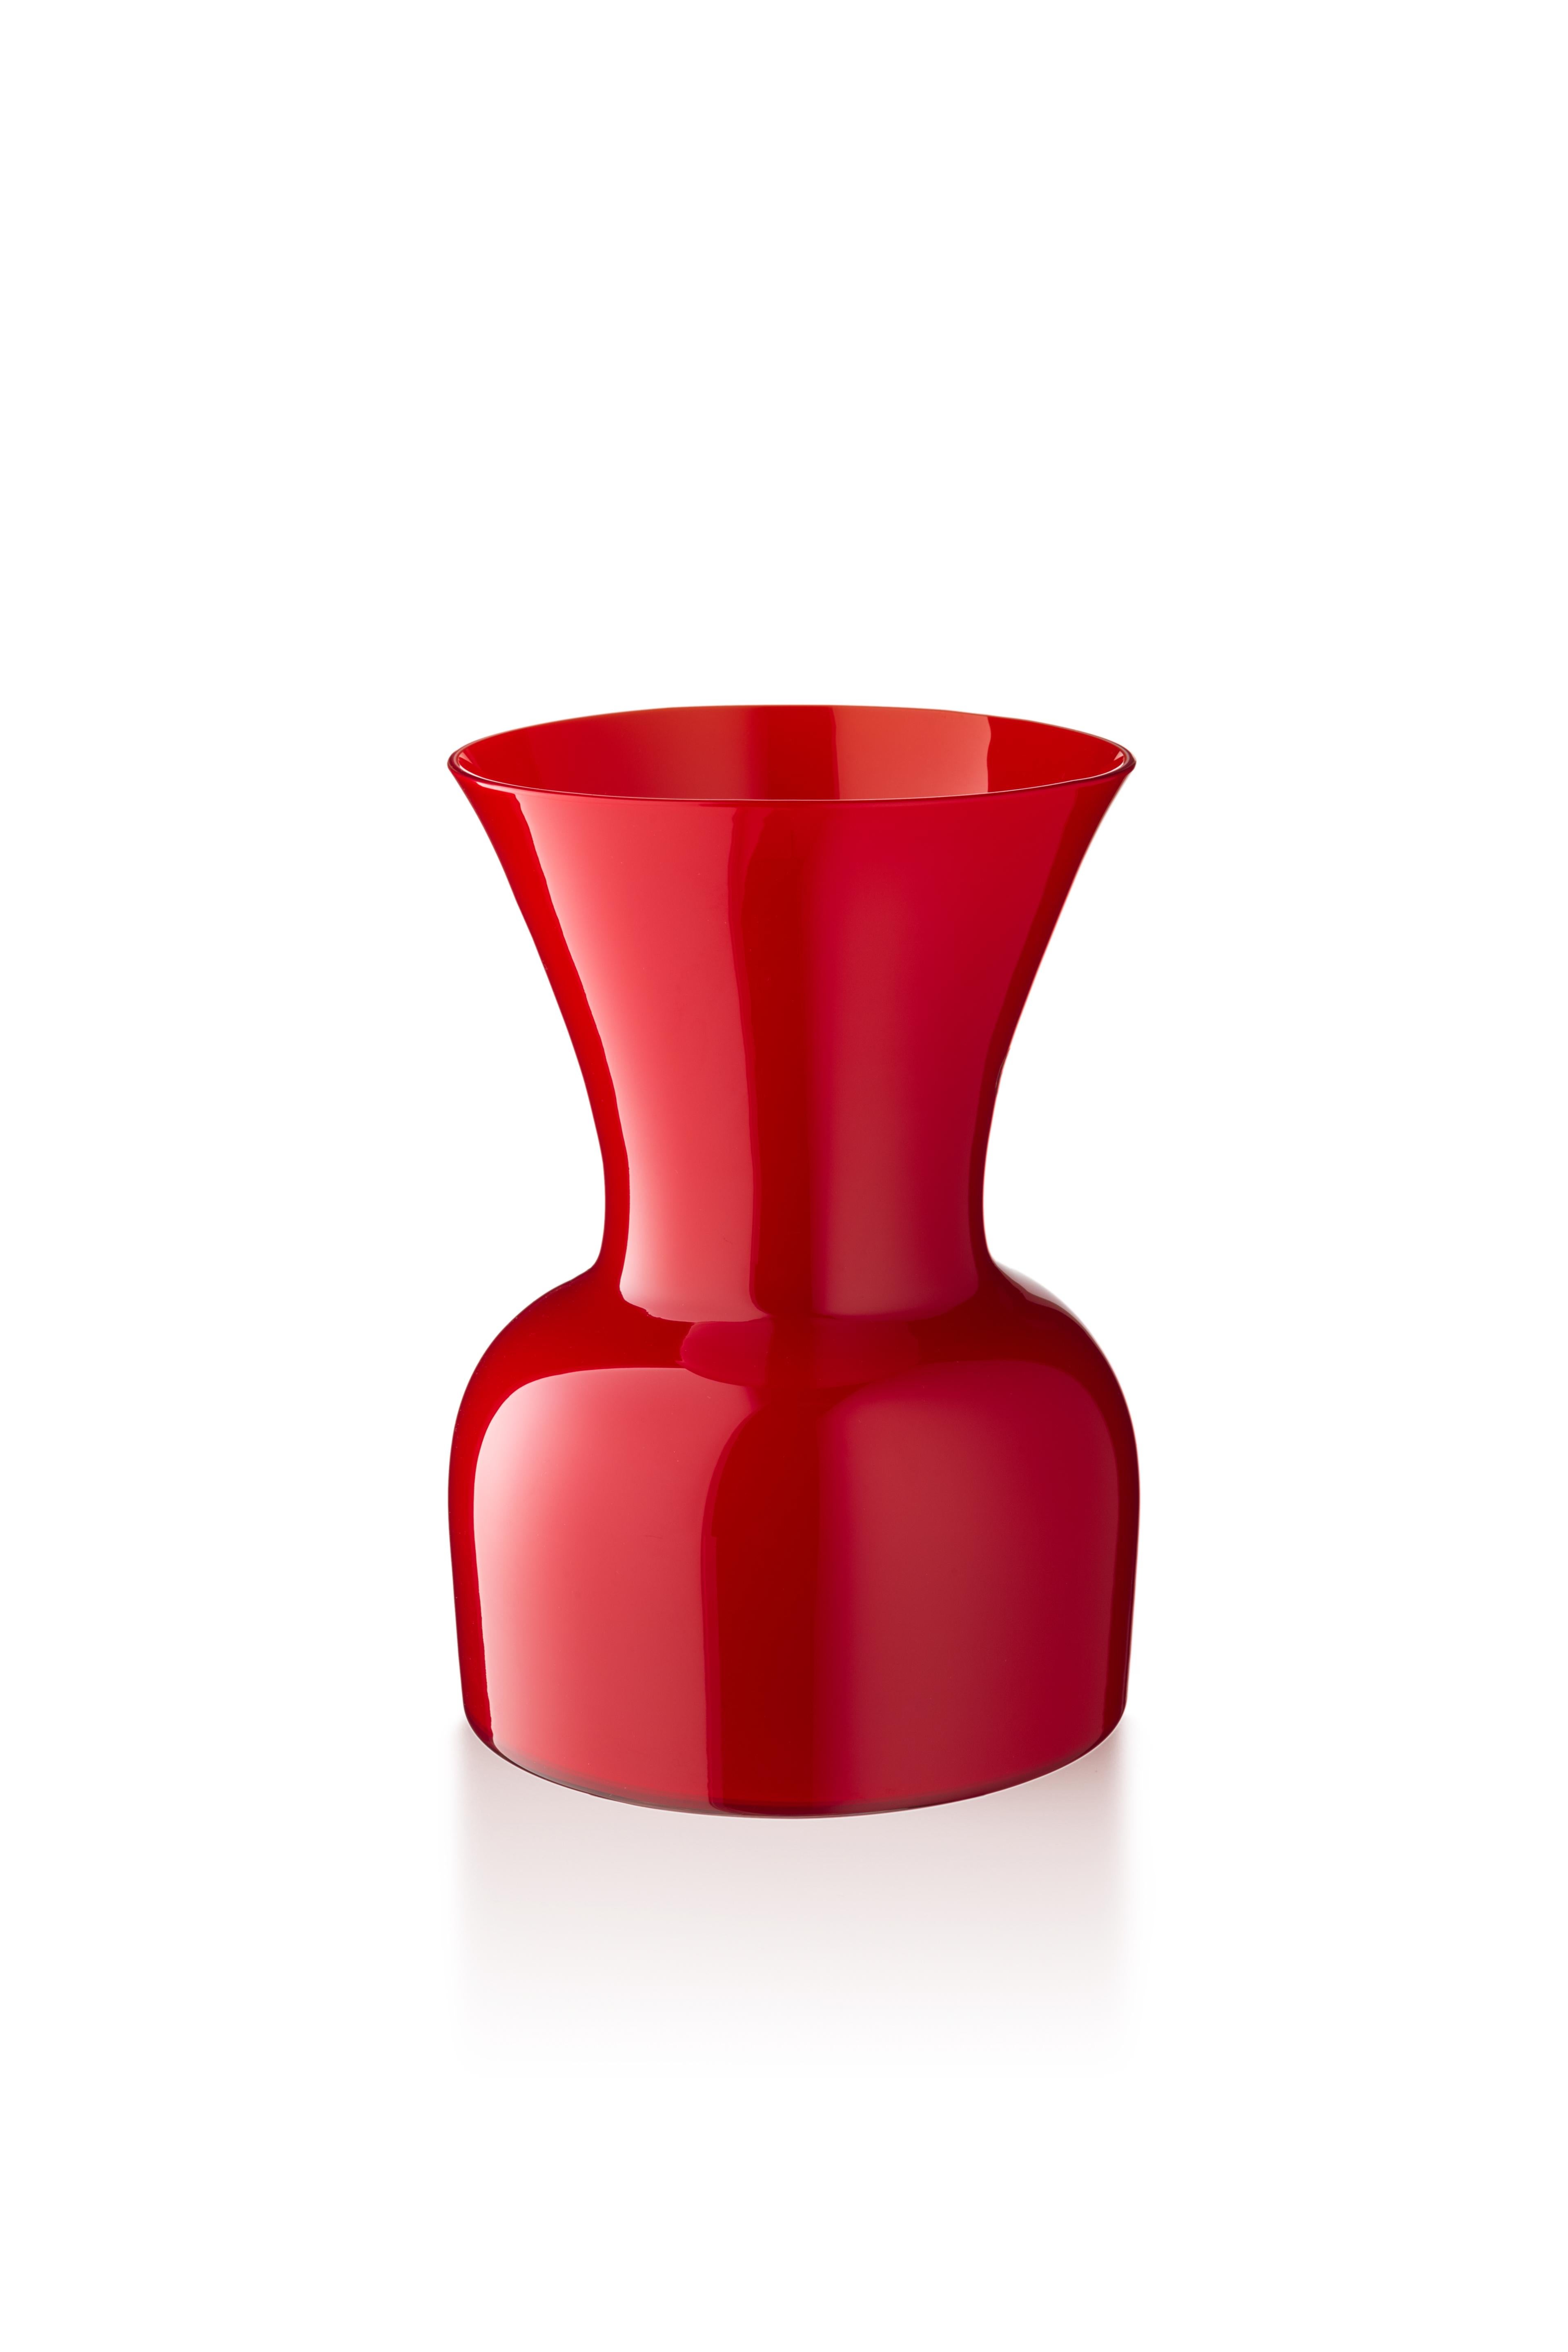 Red (10037) Medium Profili Daisy Murano Glass Vase by Anna Gili